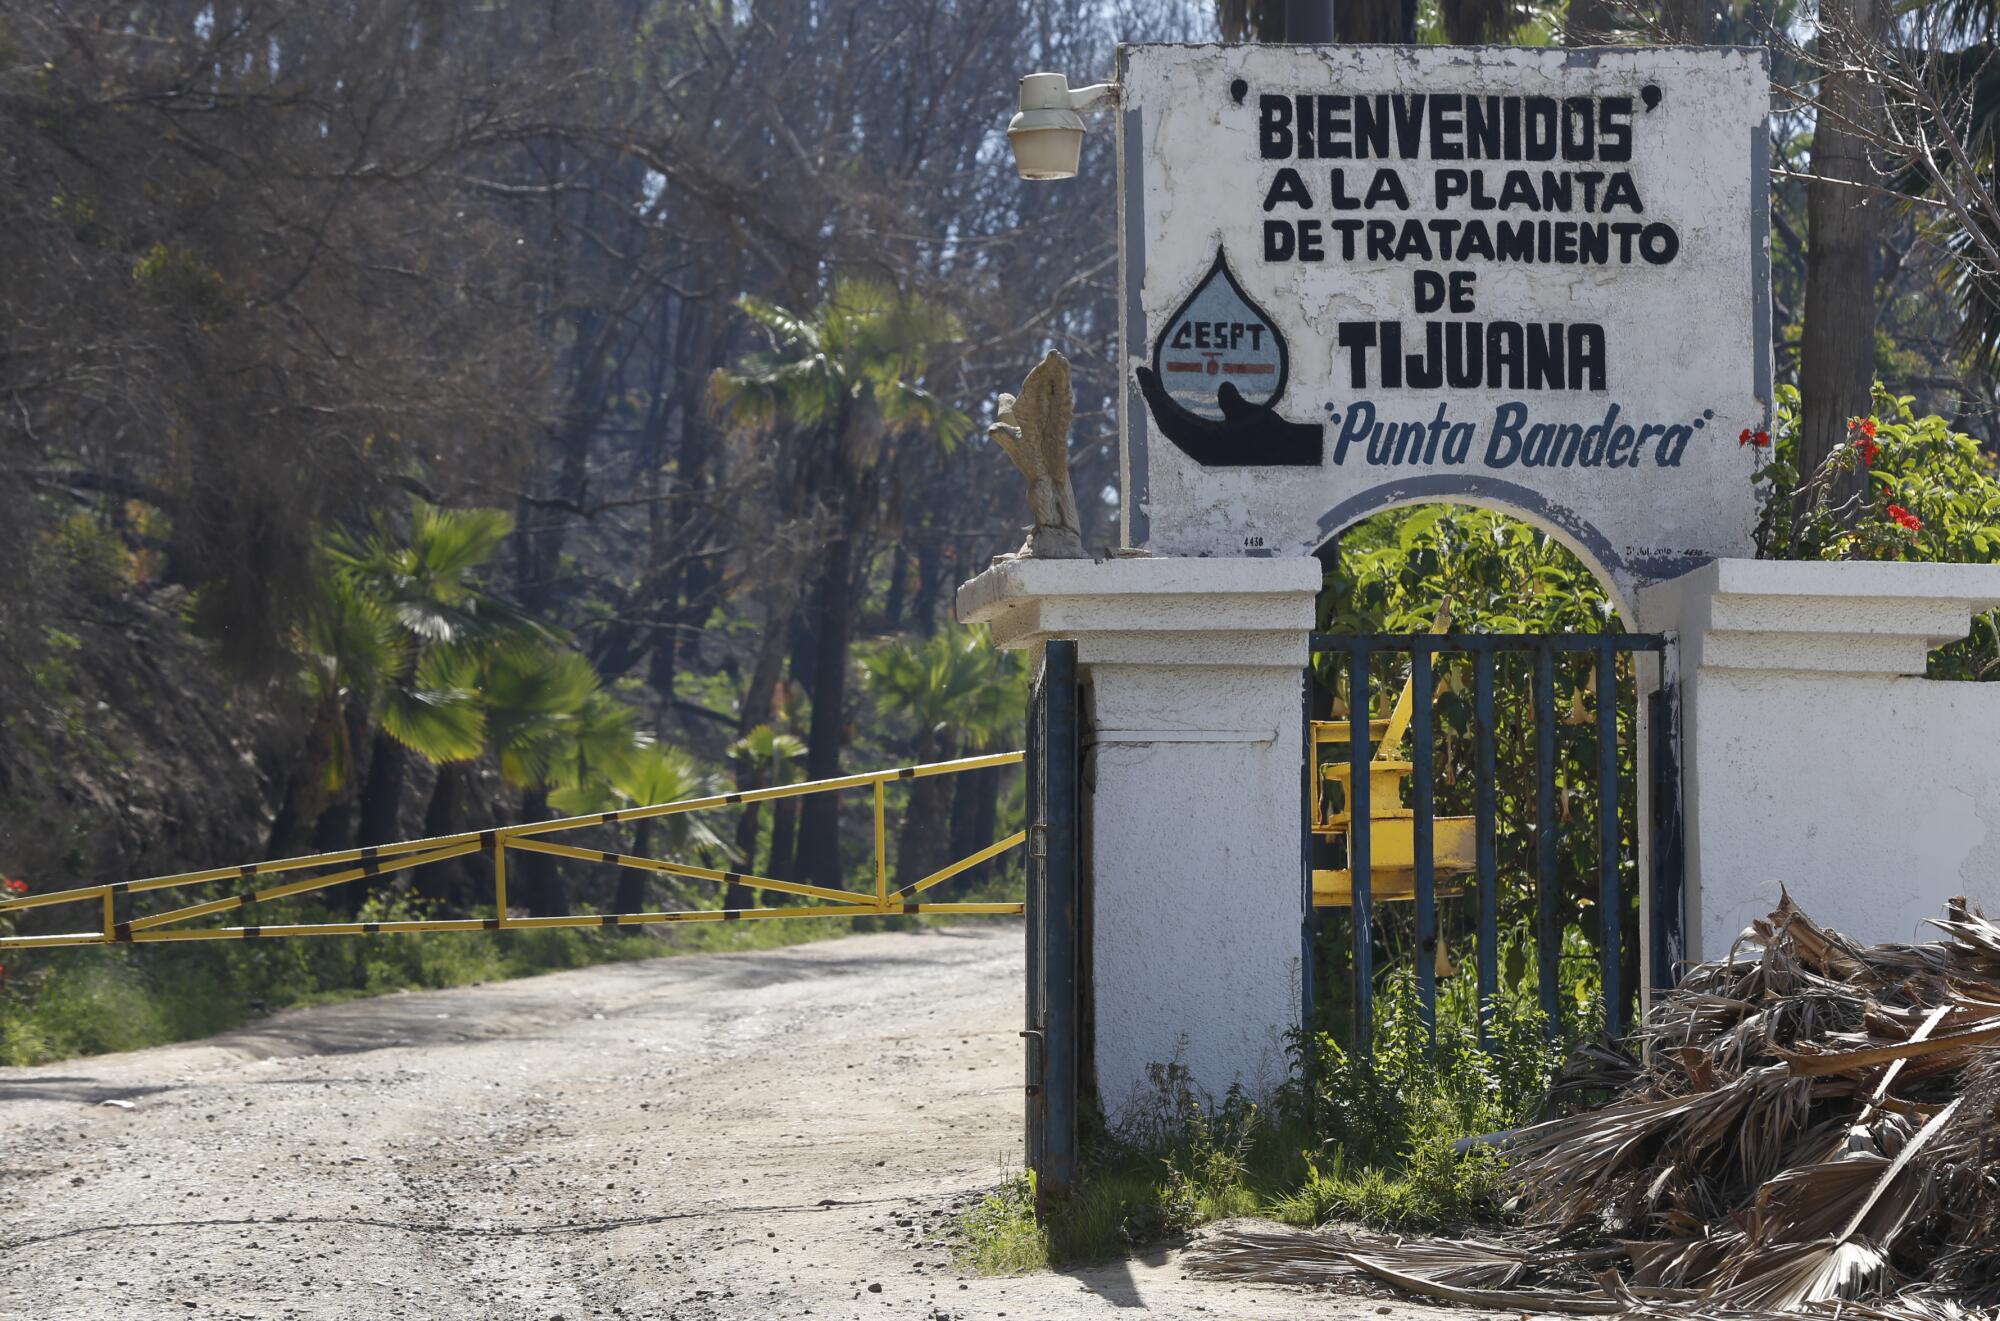 The front gates of San Antonio de los Buenos sewage treatment plant